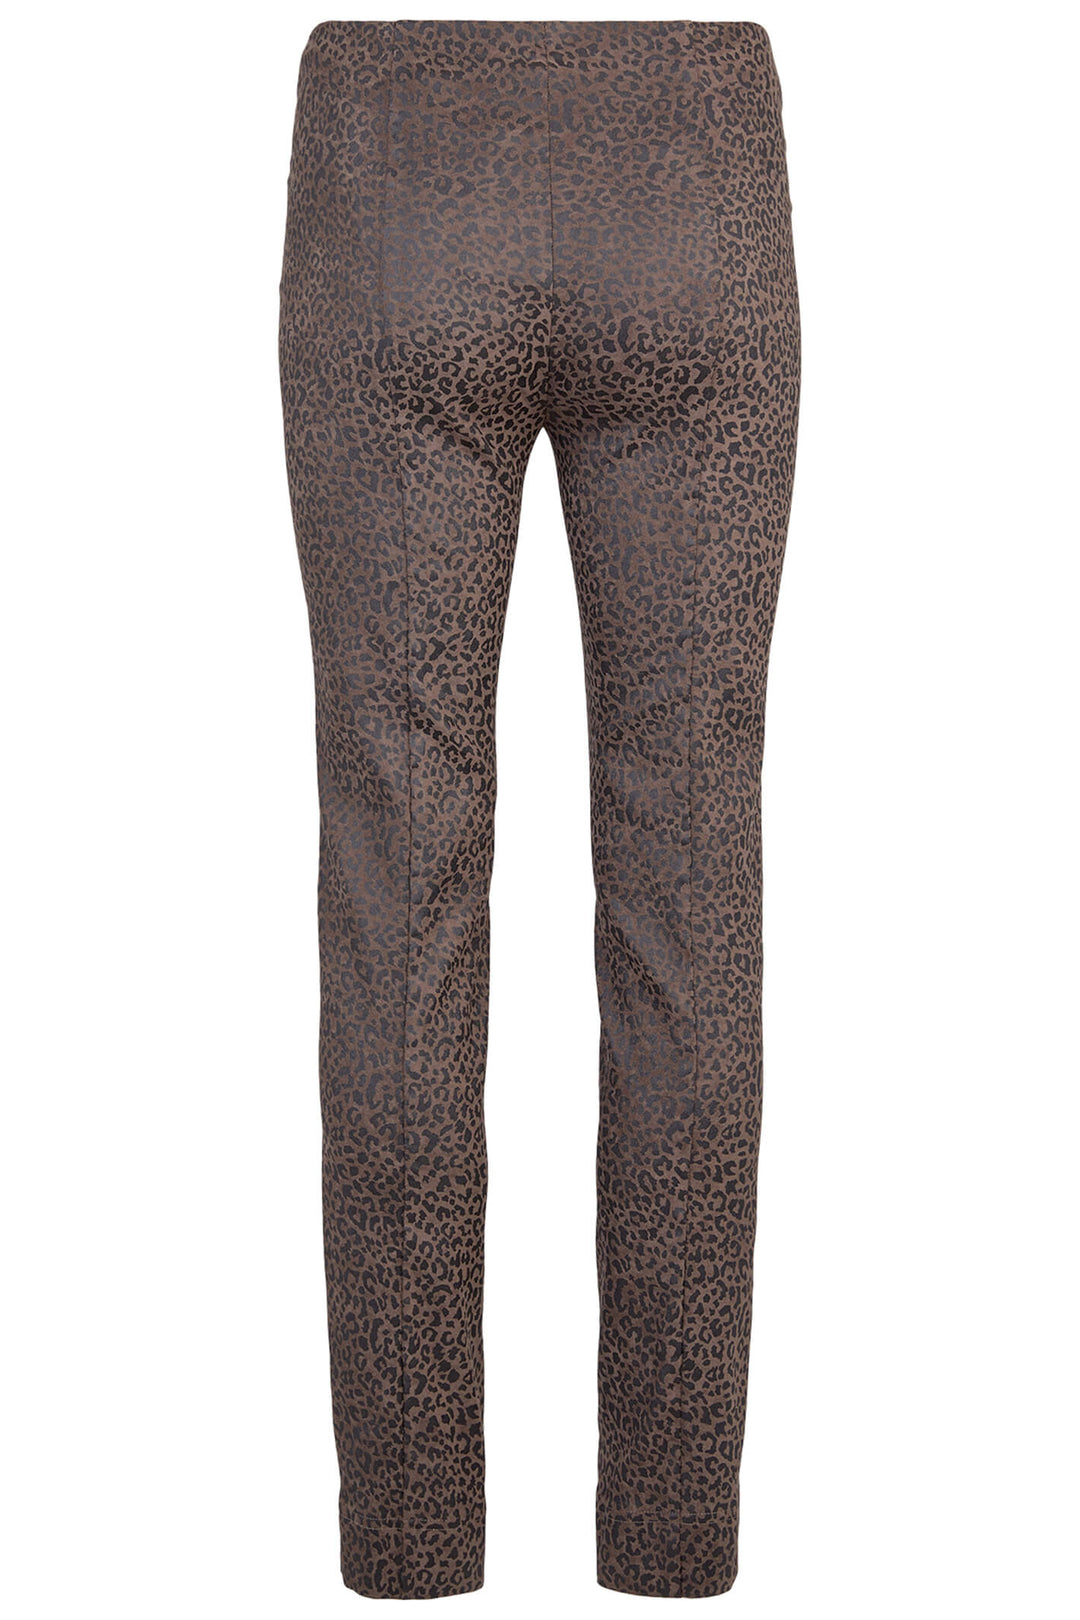 Robell 51673-54494-38 Rose Regular Length Brown Leopard Print Trouser - Dotique